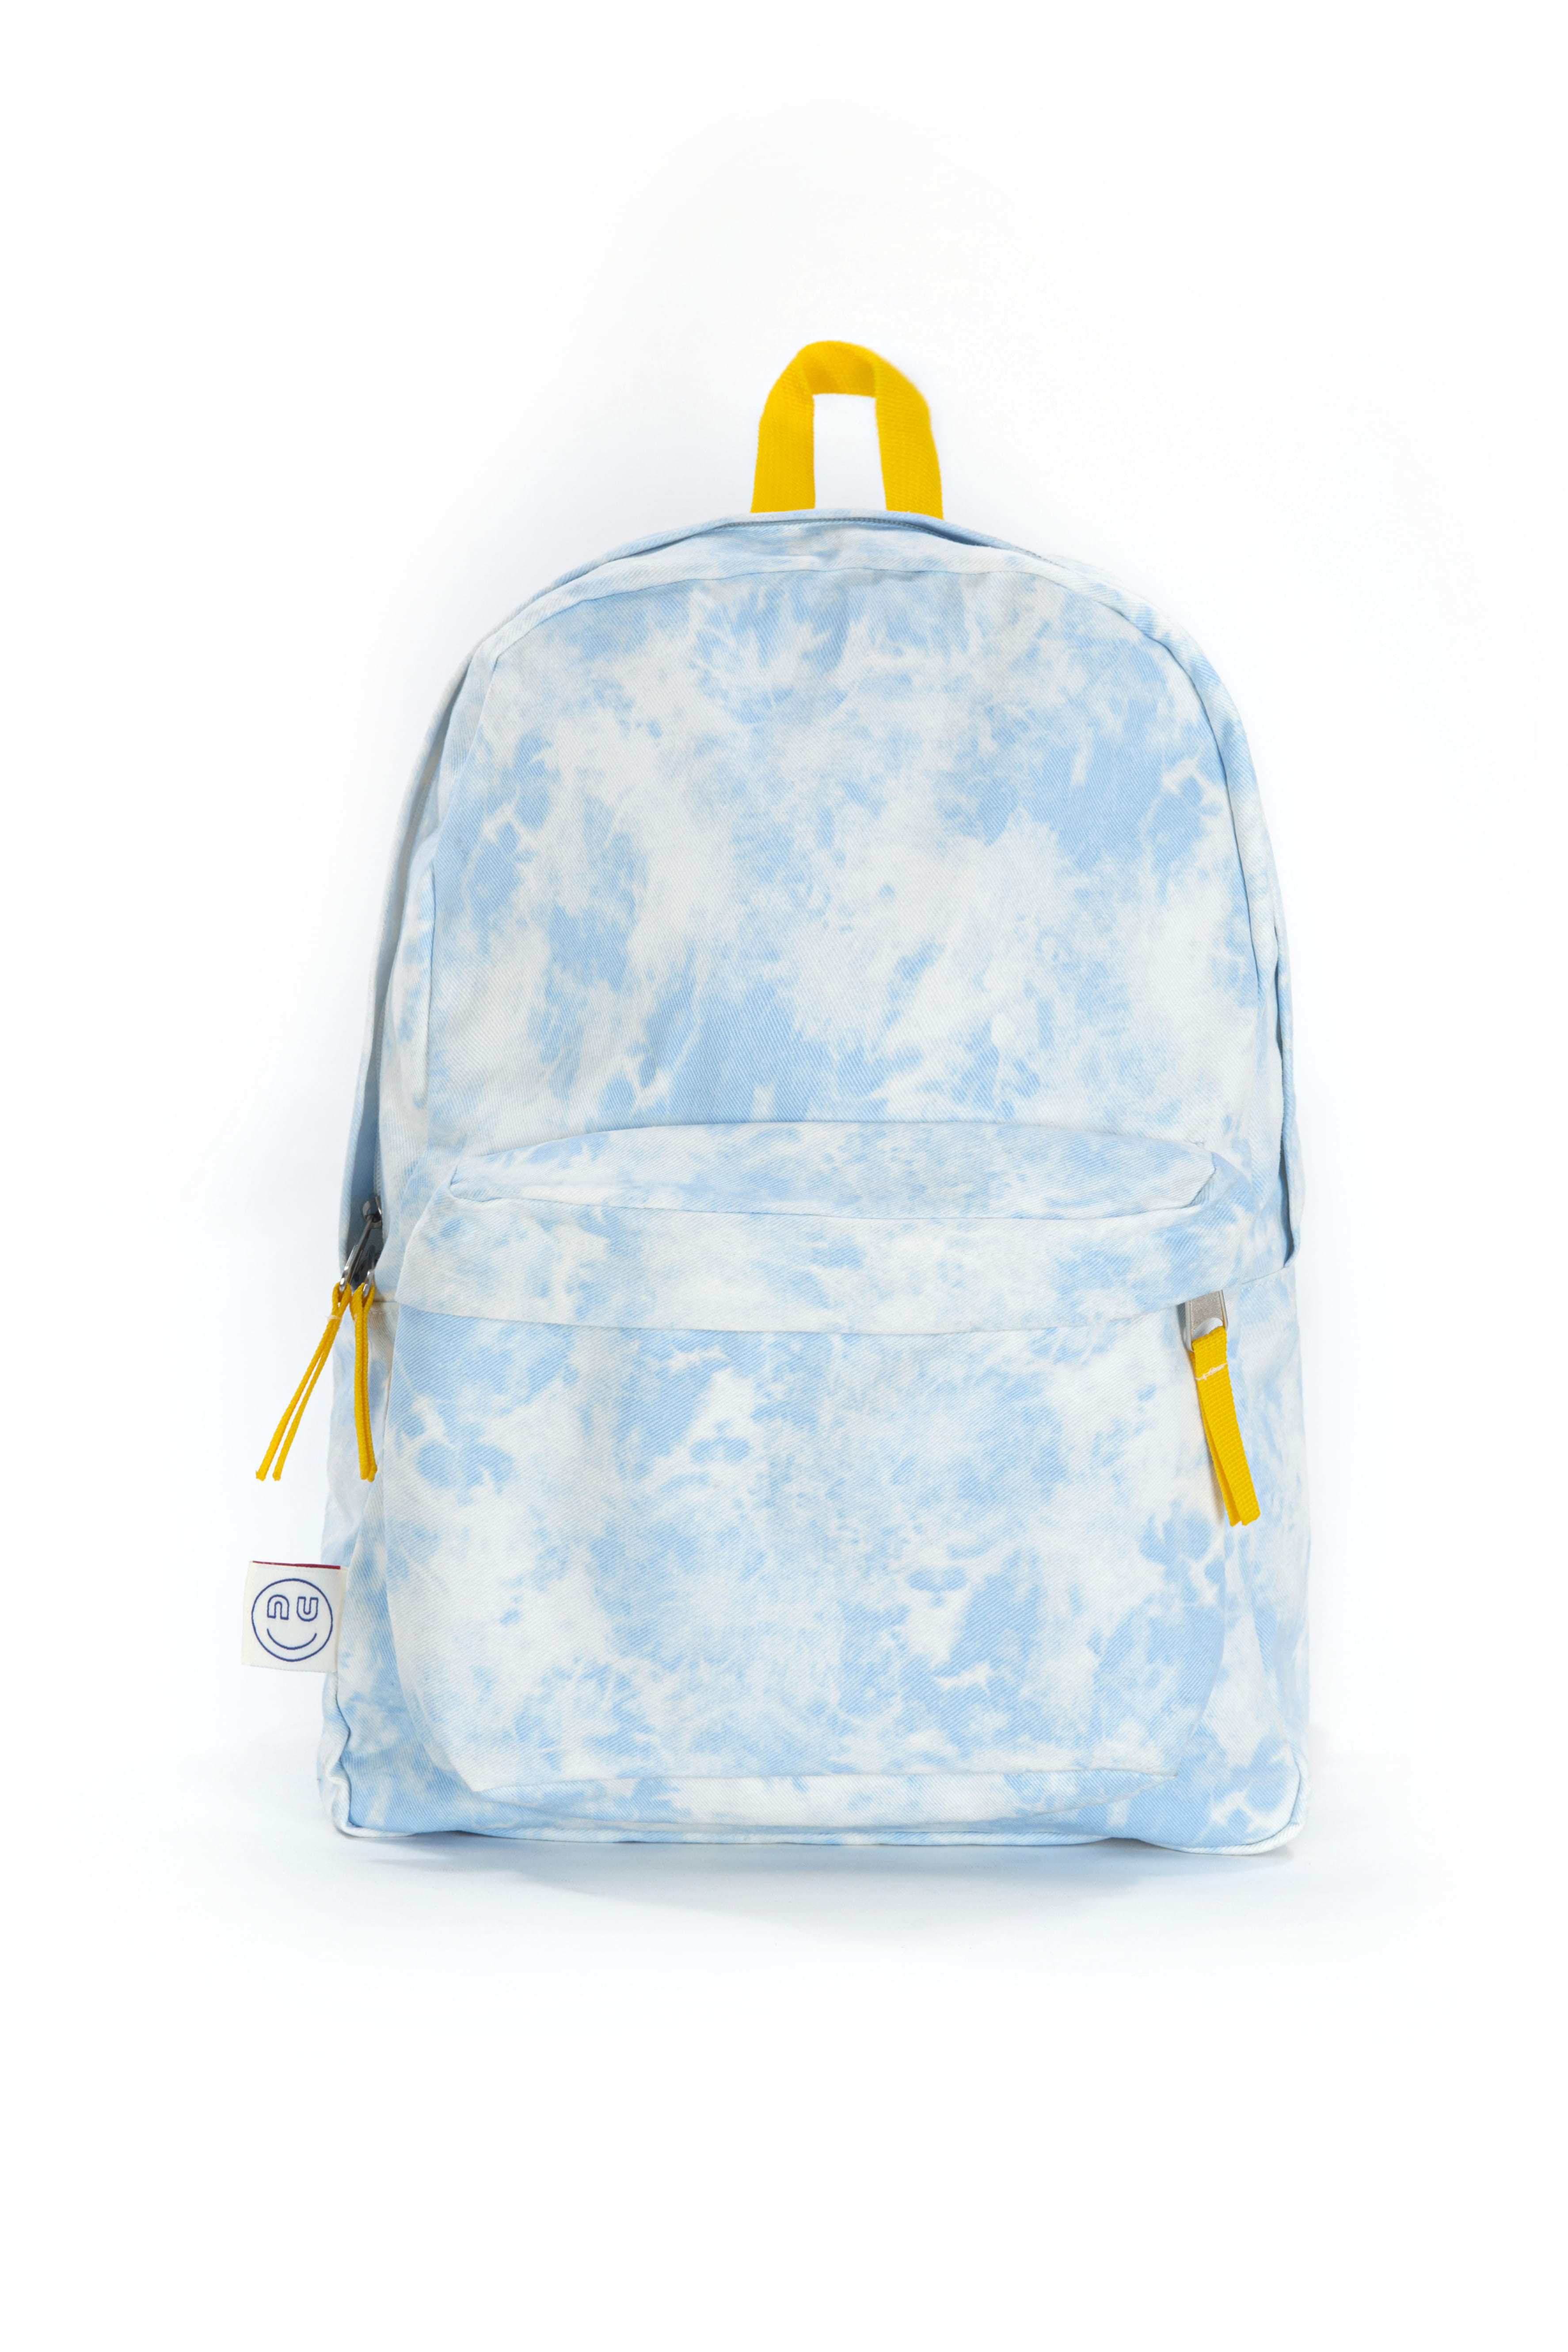 NUMOMU SCHOOL BAG [BLUE]